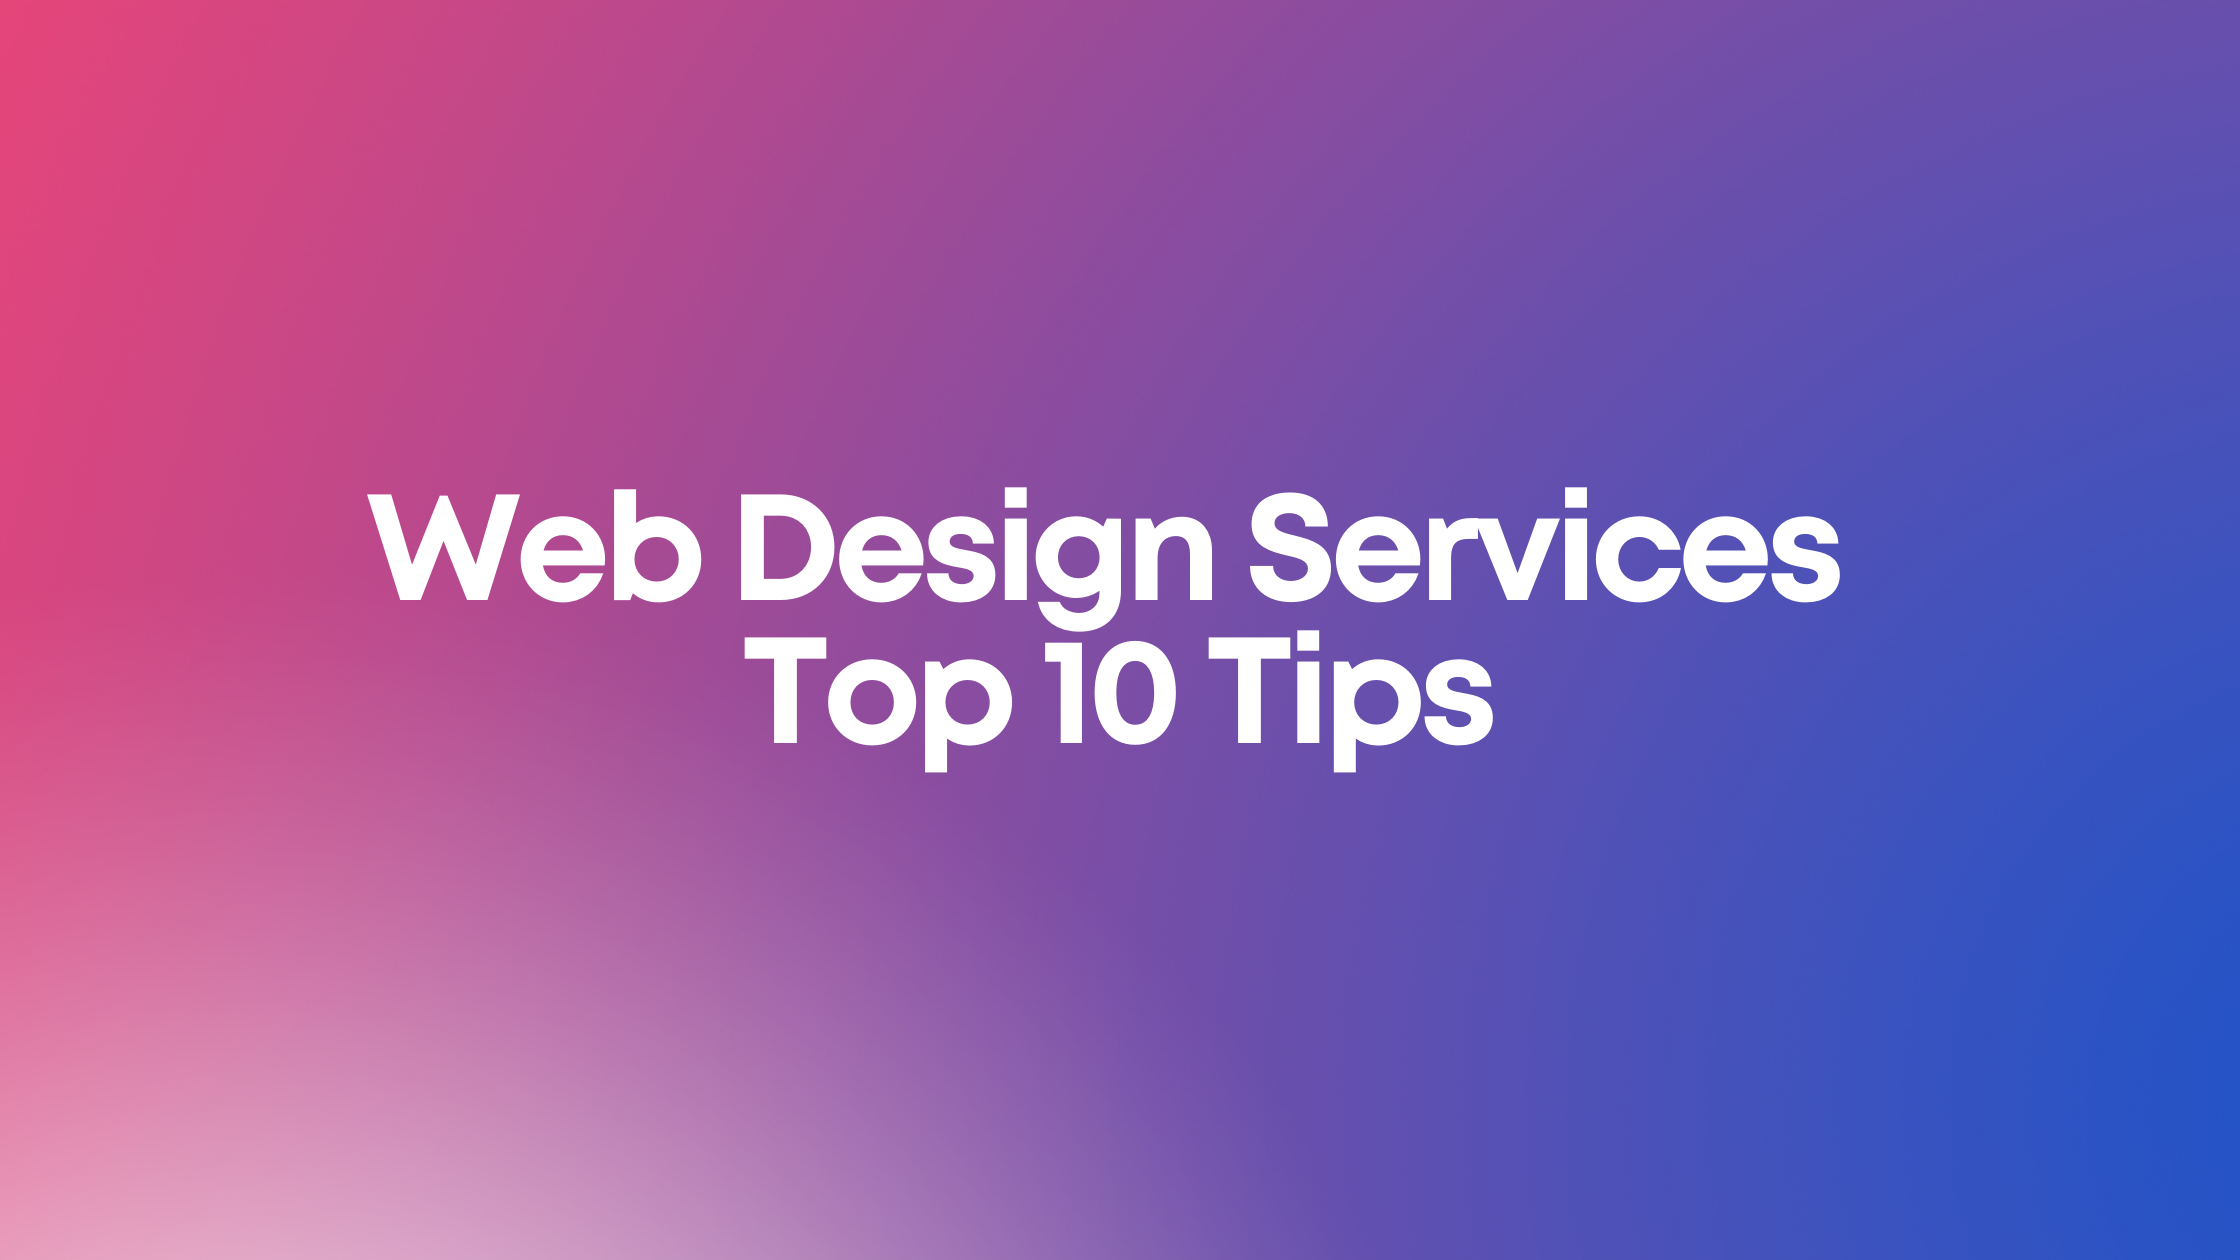 Web Design Services Top 10 Tips